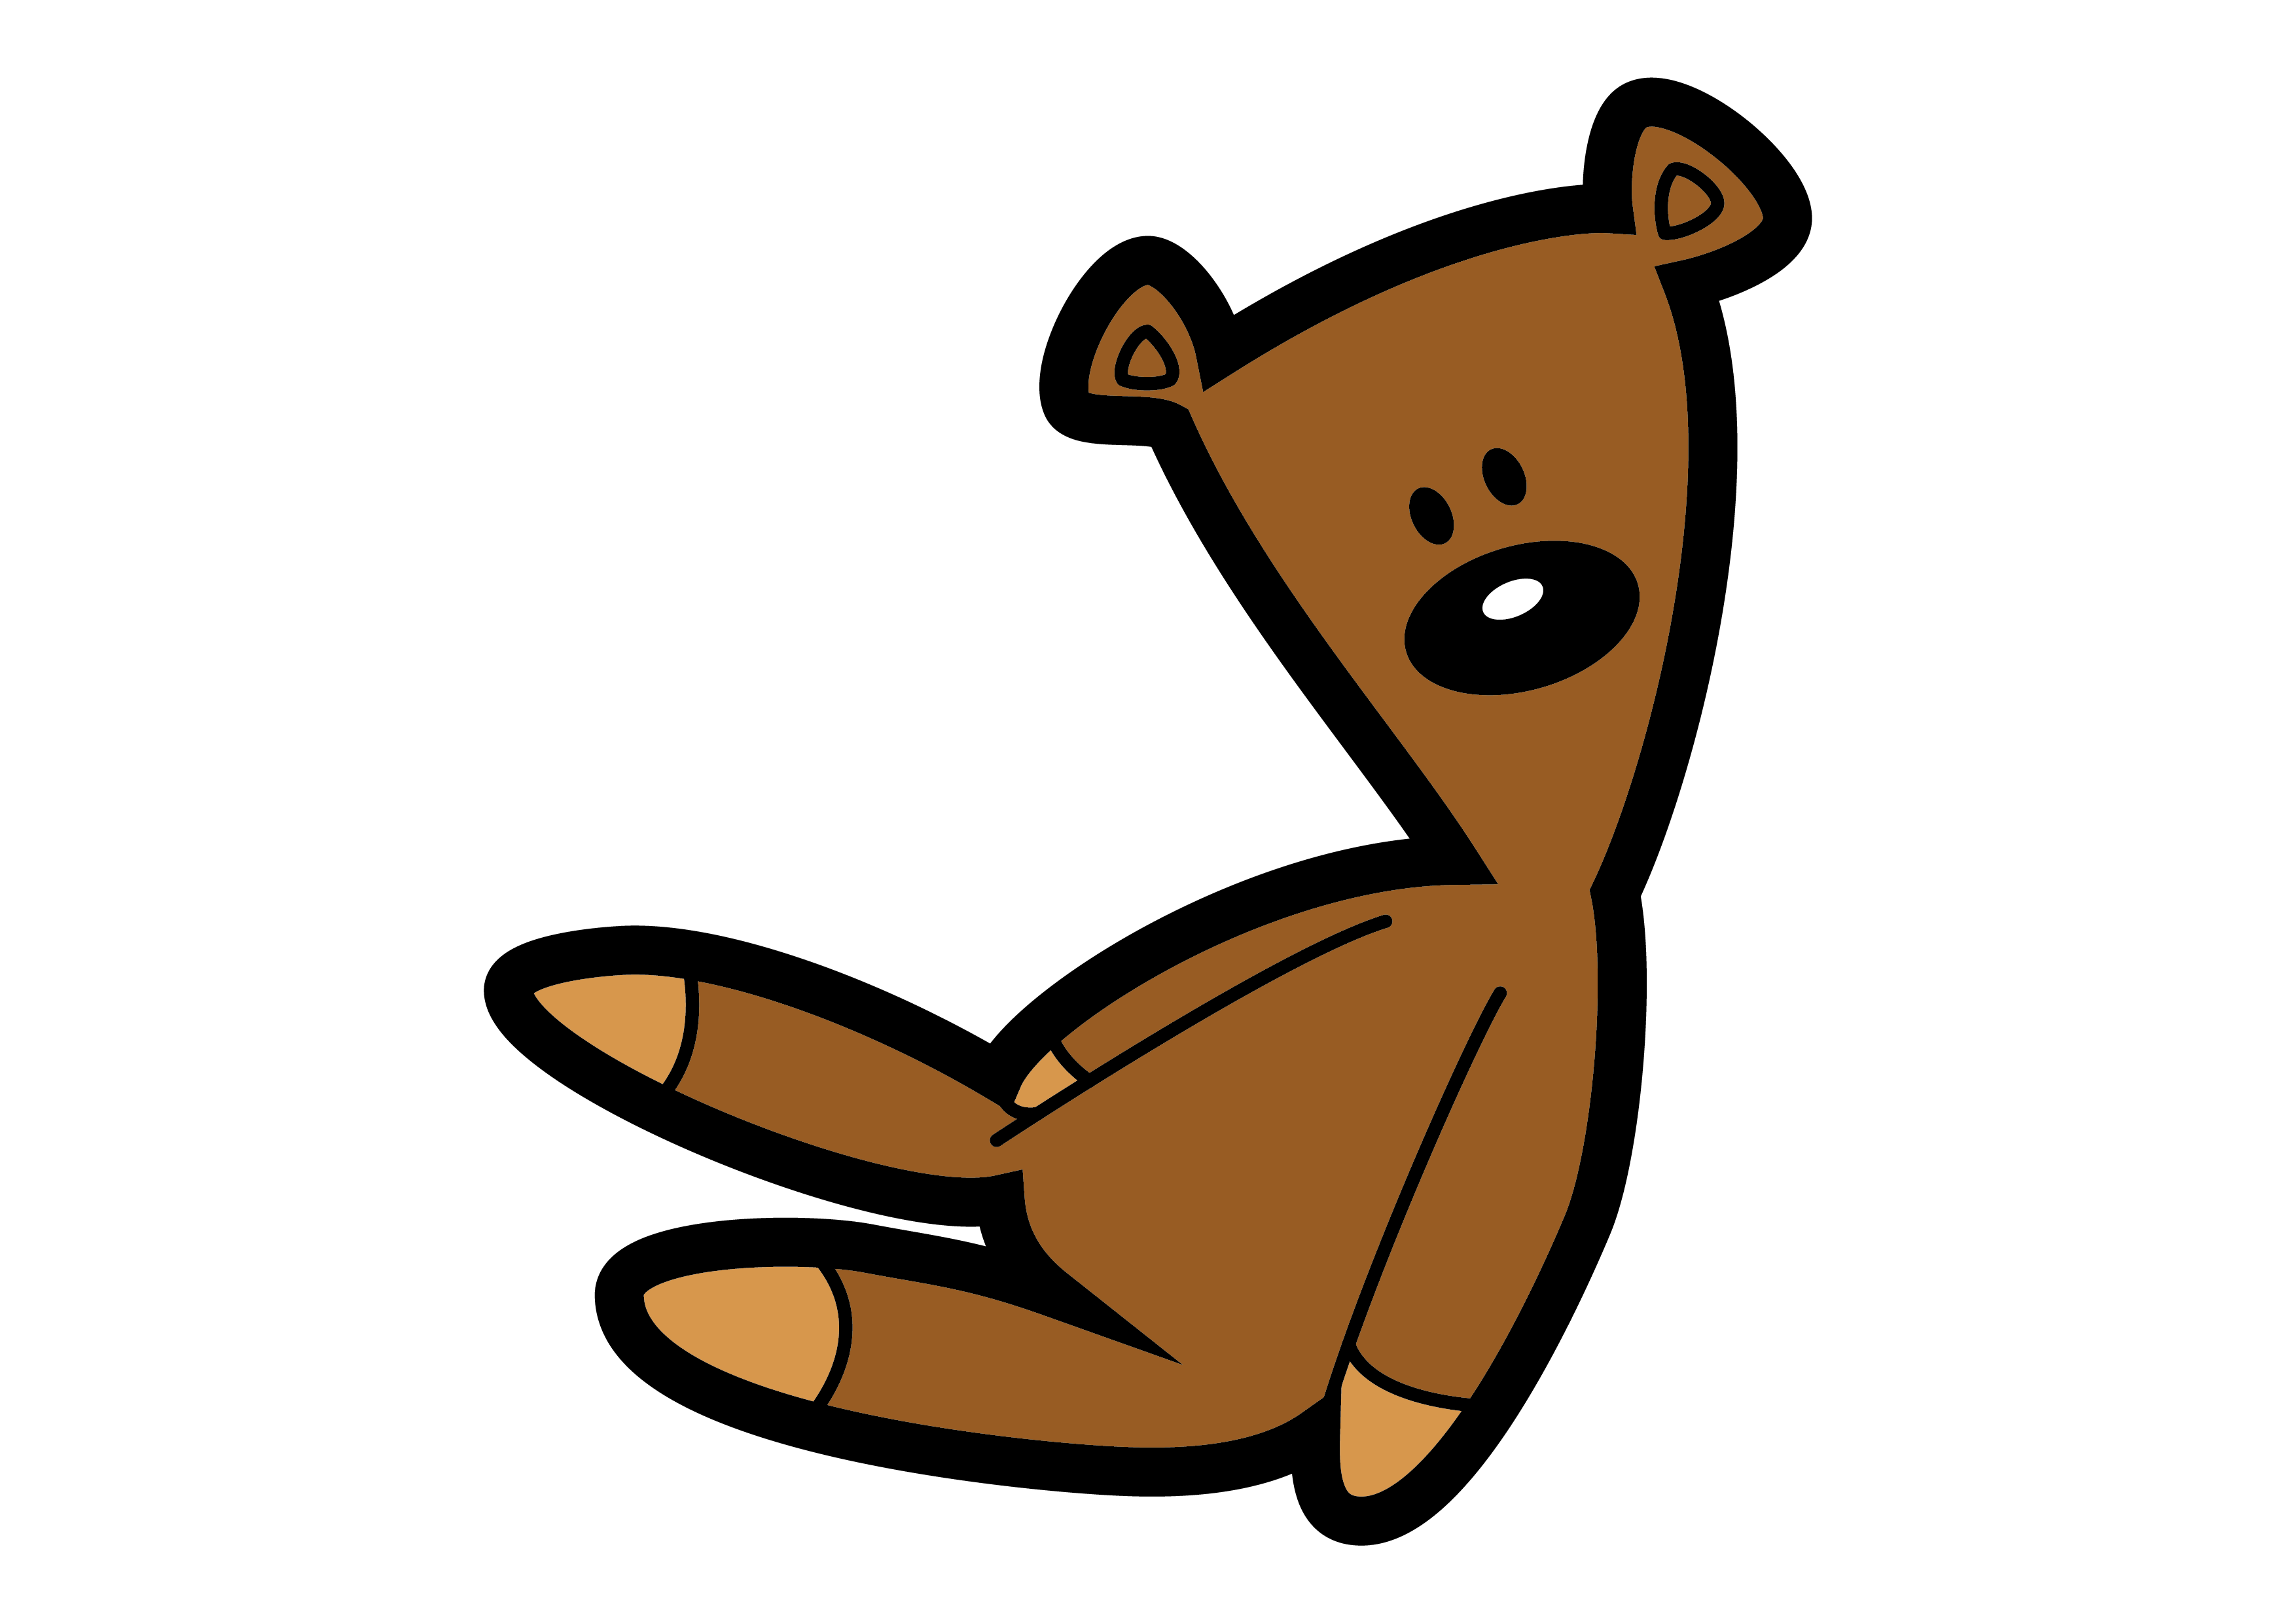 Mr bean teddy bear - devilyare